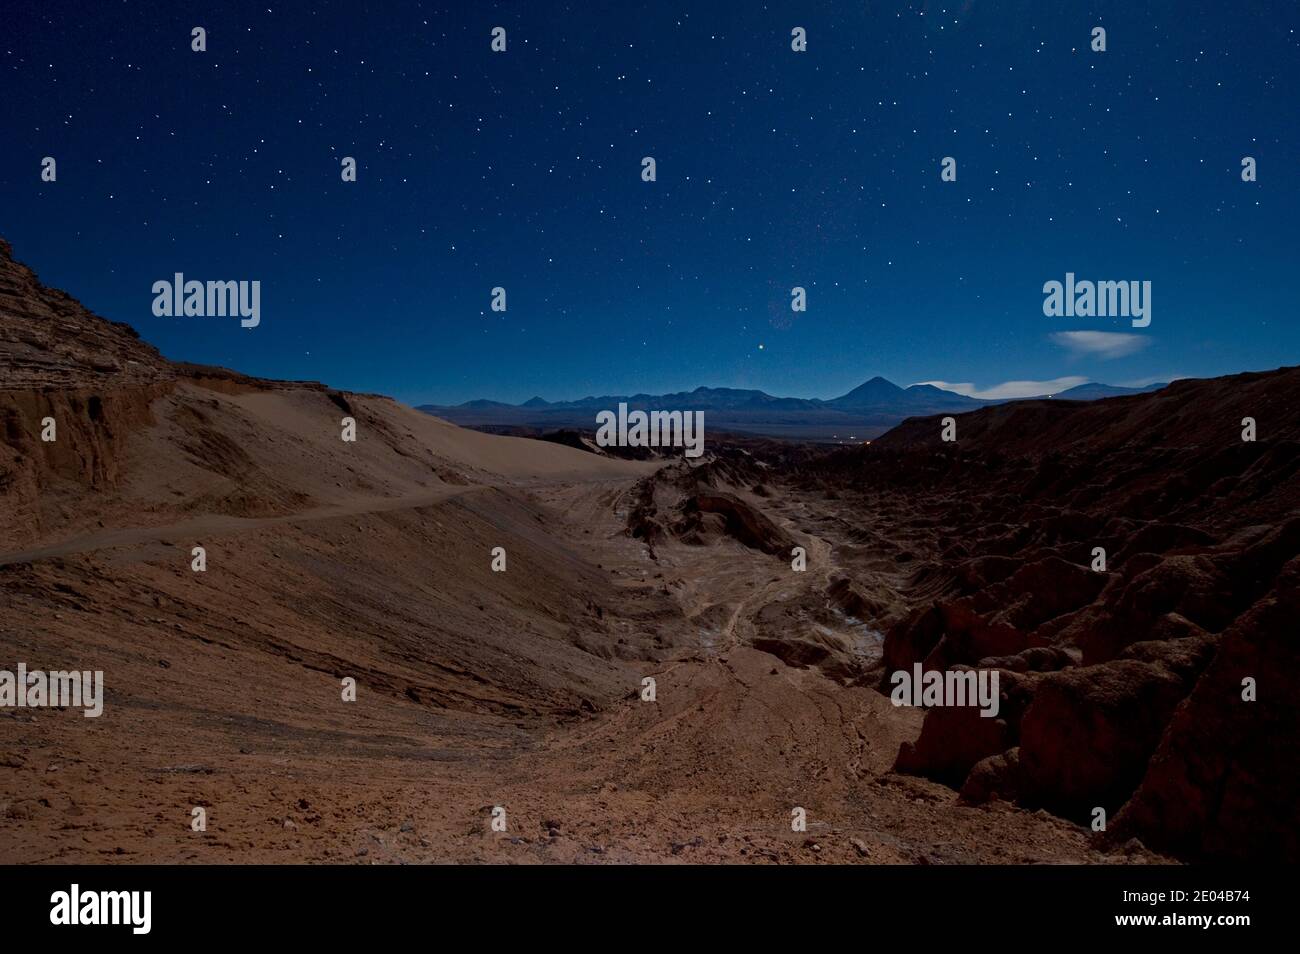 Moon valley at night, Atacama Desert, Chile Stock Photo